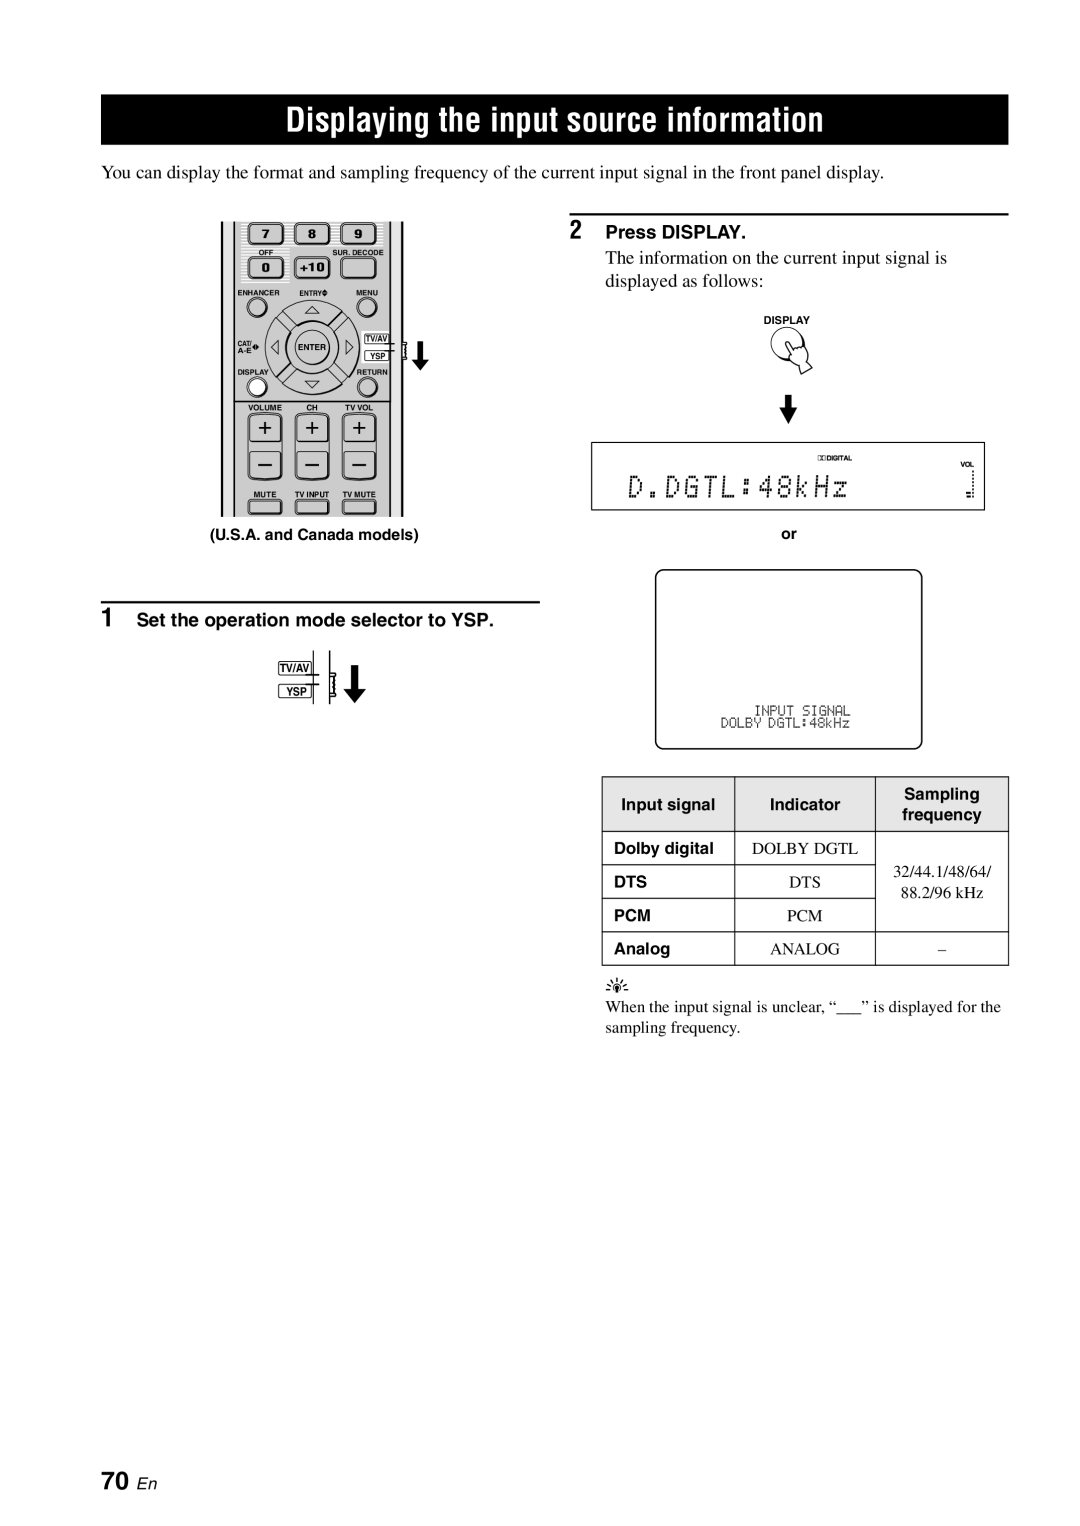 Yamaha YSP-3000 owner manual Displaying the input source information, D.DGTL 48kHz, 70 En, Press DISPLAY 